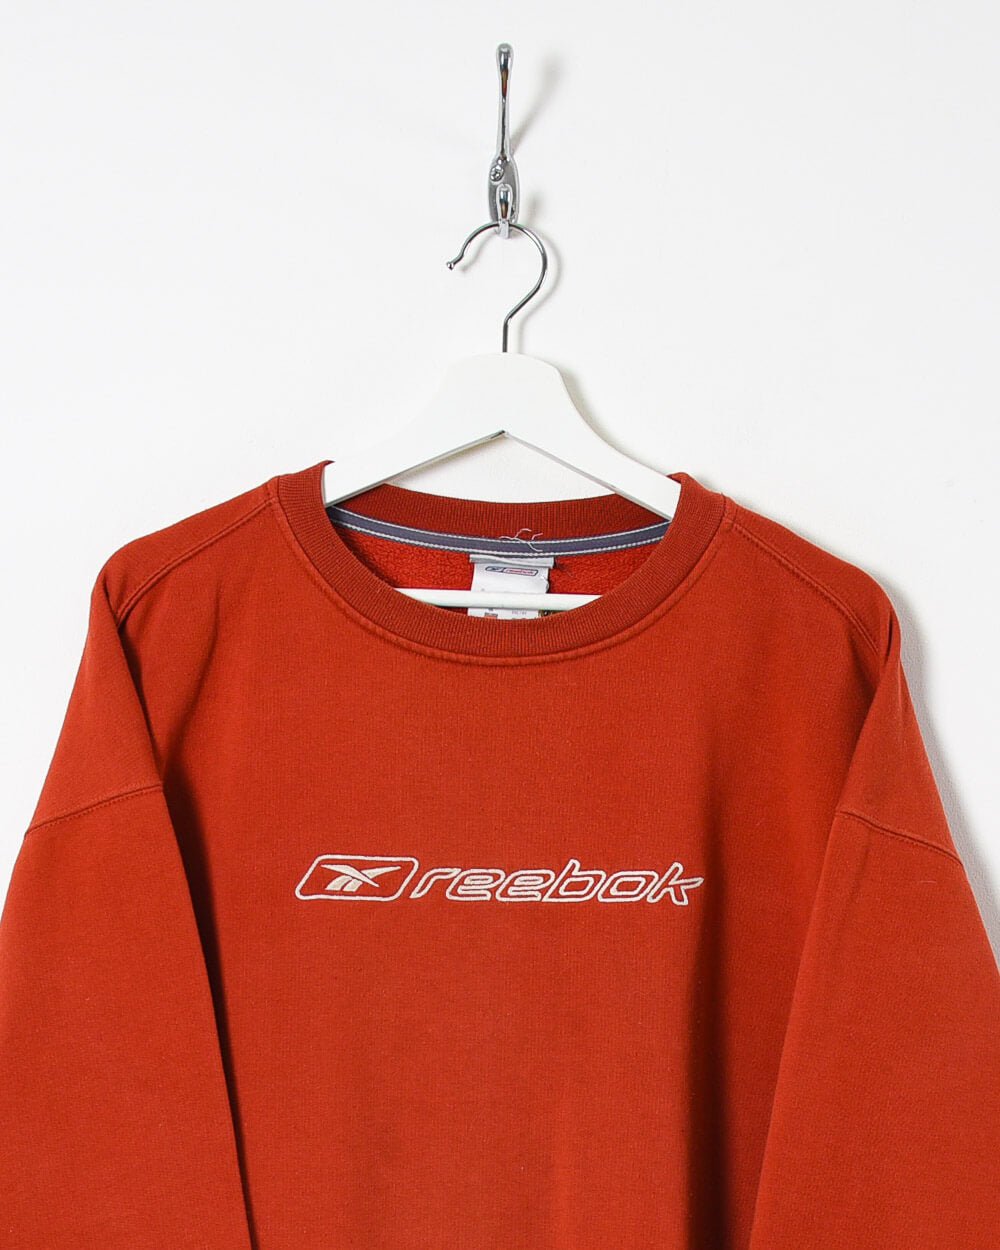 Reebok Sweatshirt - XX-Large - Domno Vintage 90s, 80s, 00s Retro and Vintage Clothing 